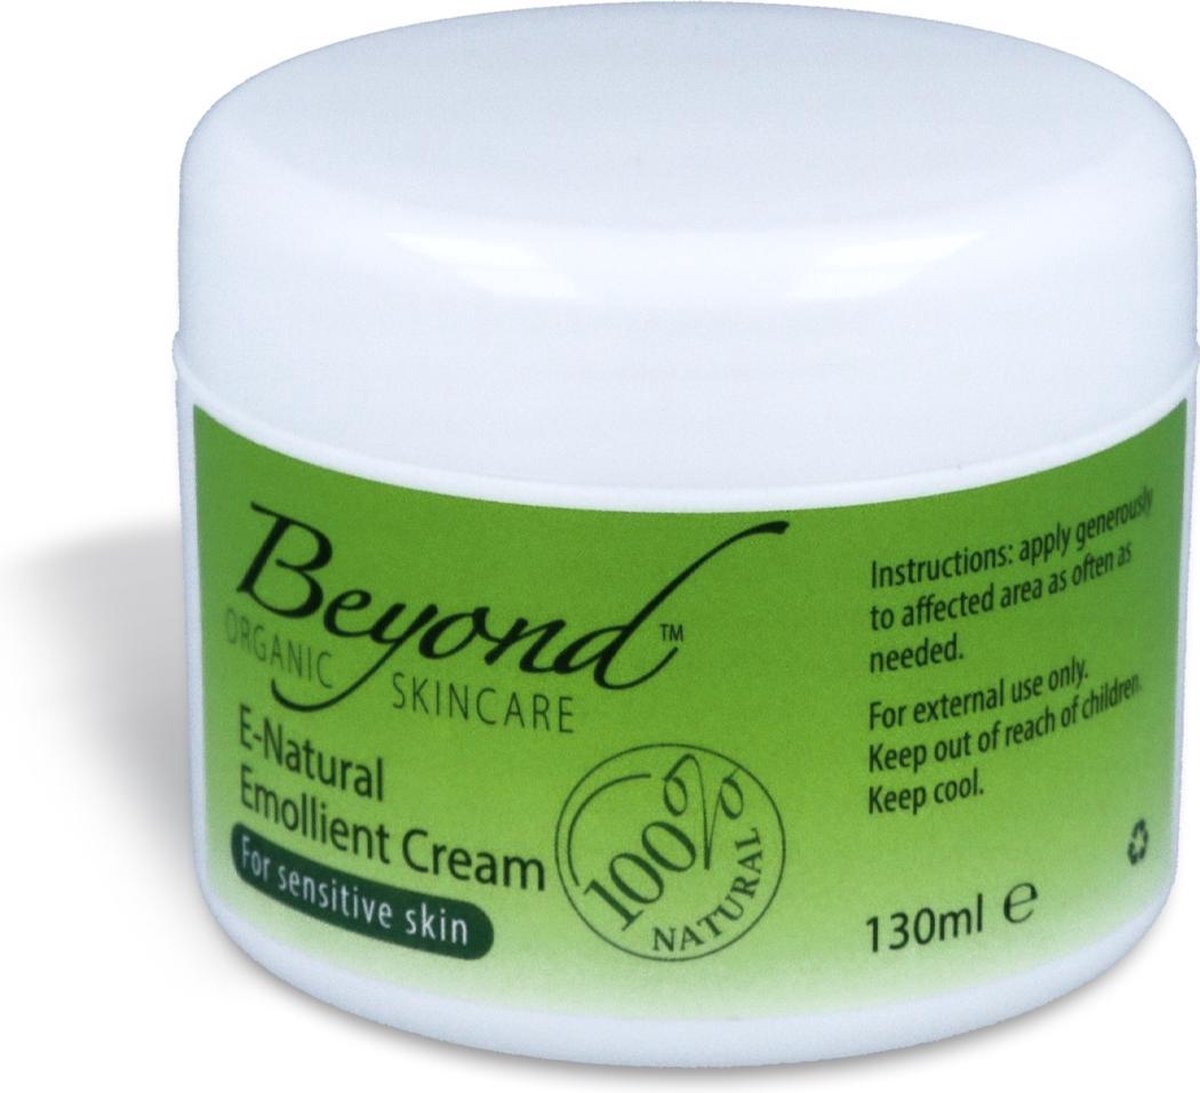 Beyond Organic Skincare - E-Natural Emollient cream - zeer droge huid - eczeem - Psoriasis -